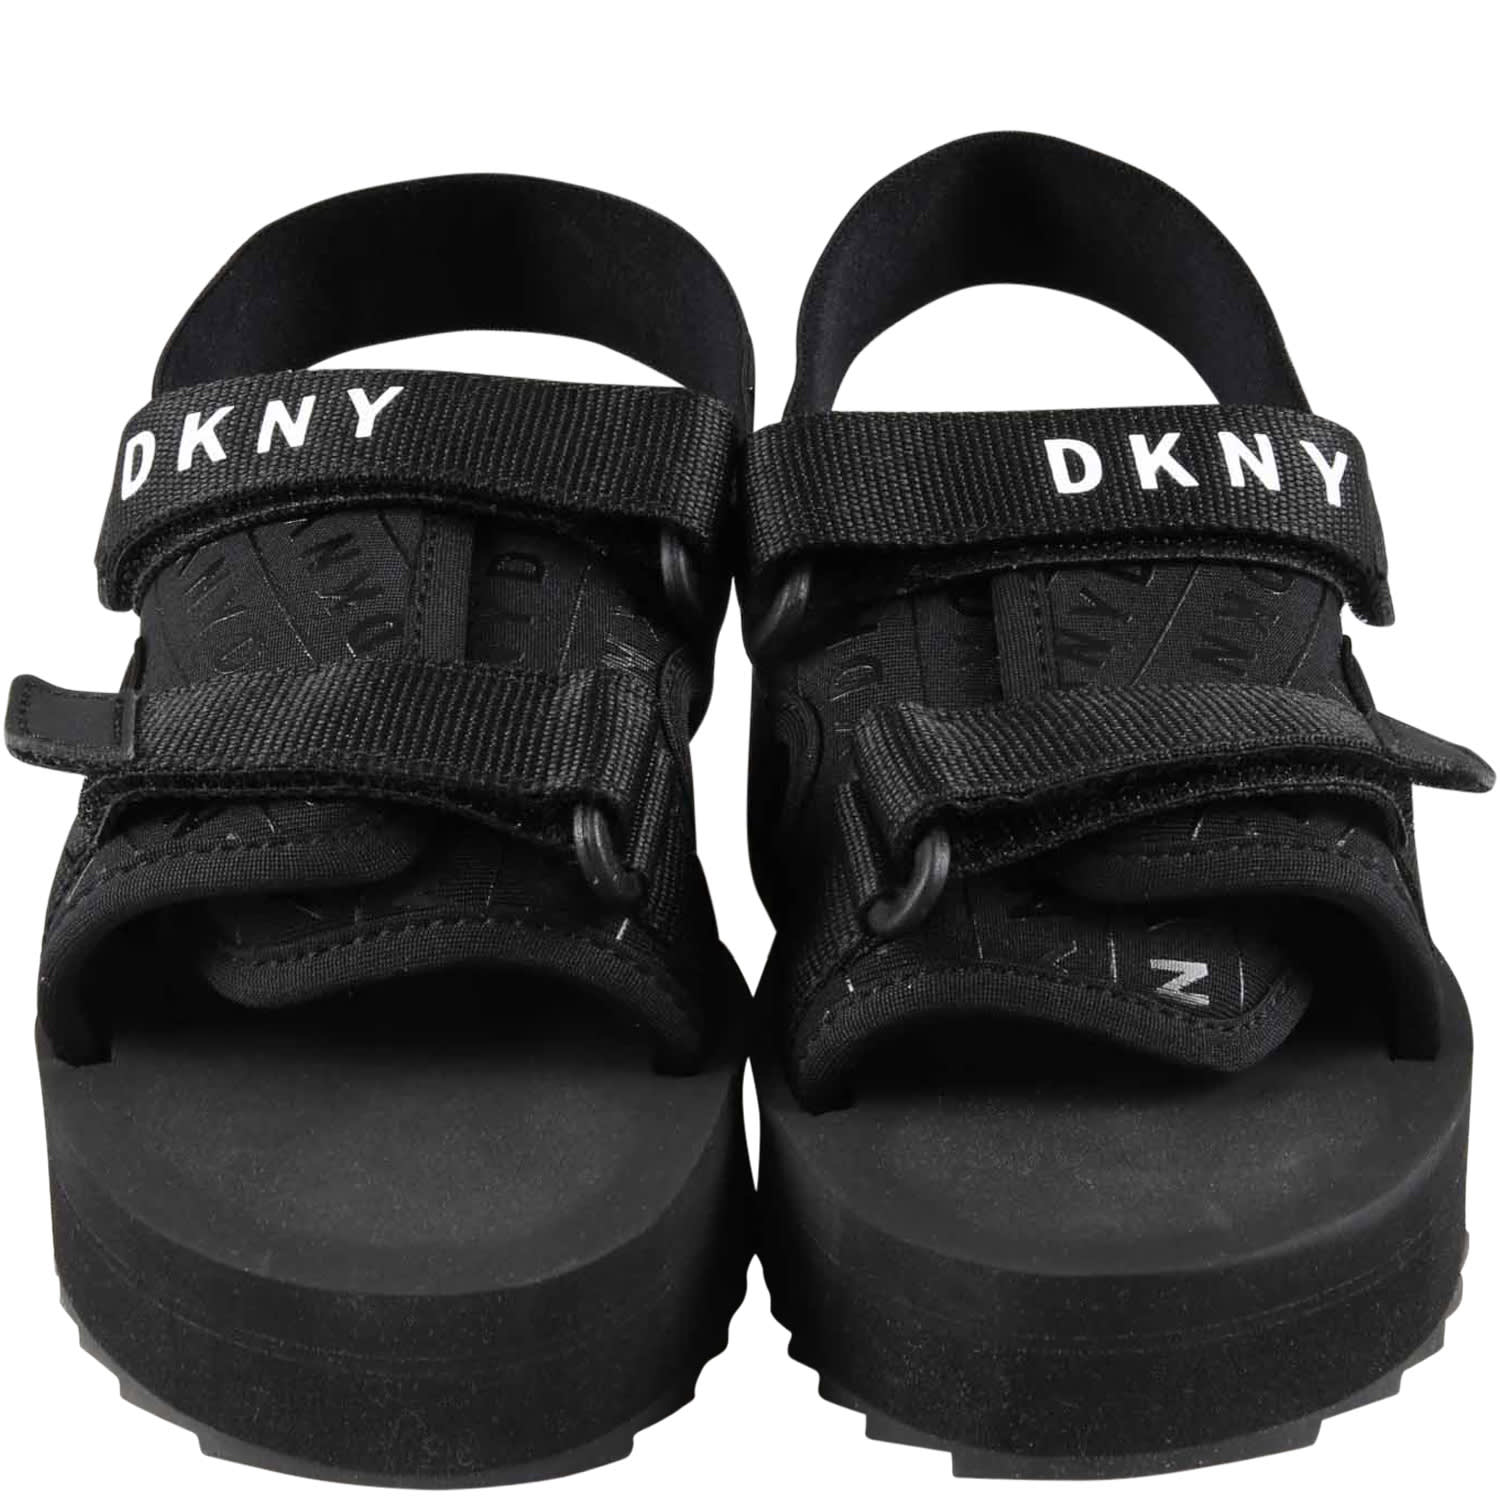 DKNY BLACK SANDALS FOR GIRL WITH WHITE LOGO 